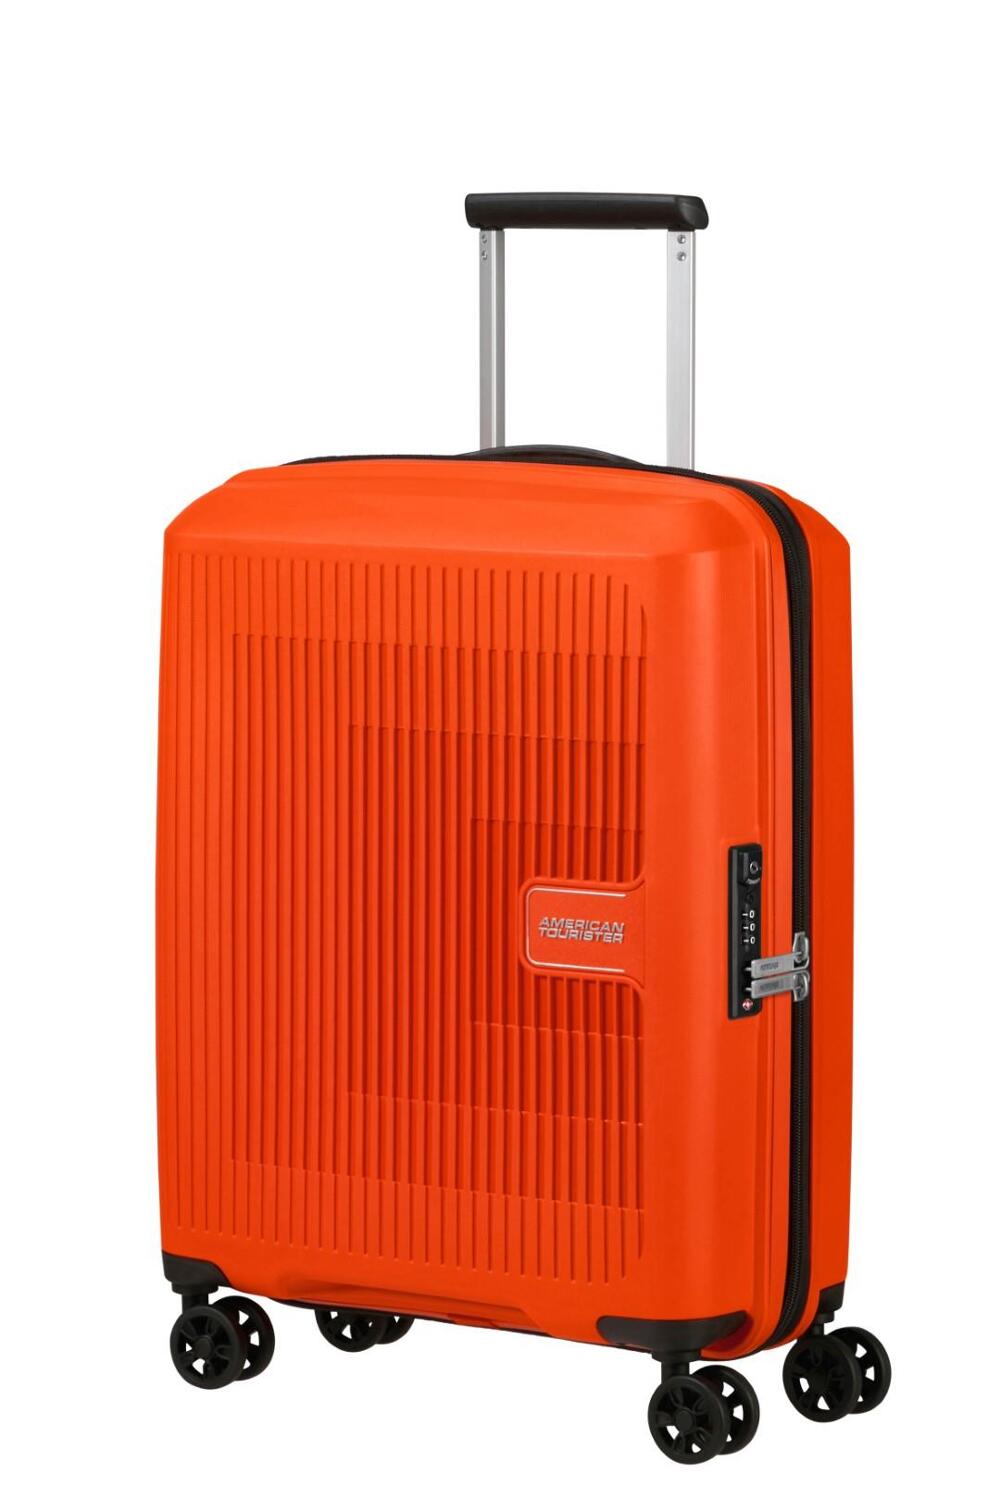 TSA BAGMONDO SPINNER AEROSTEP Samsonite | 55/20 TOURISTER AMERICAN - orange EXP - bright -